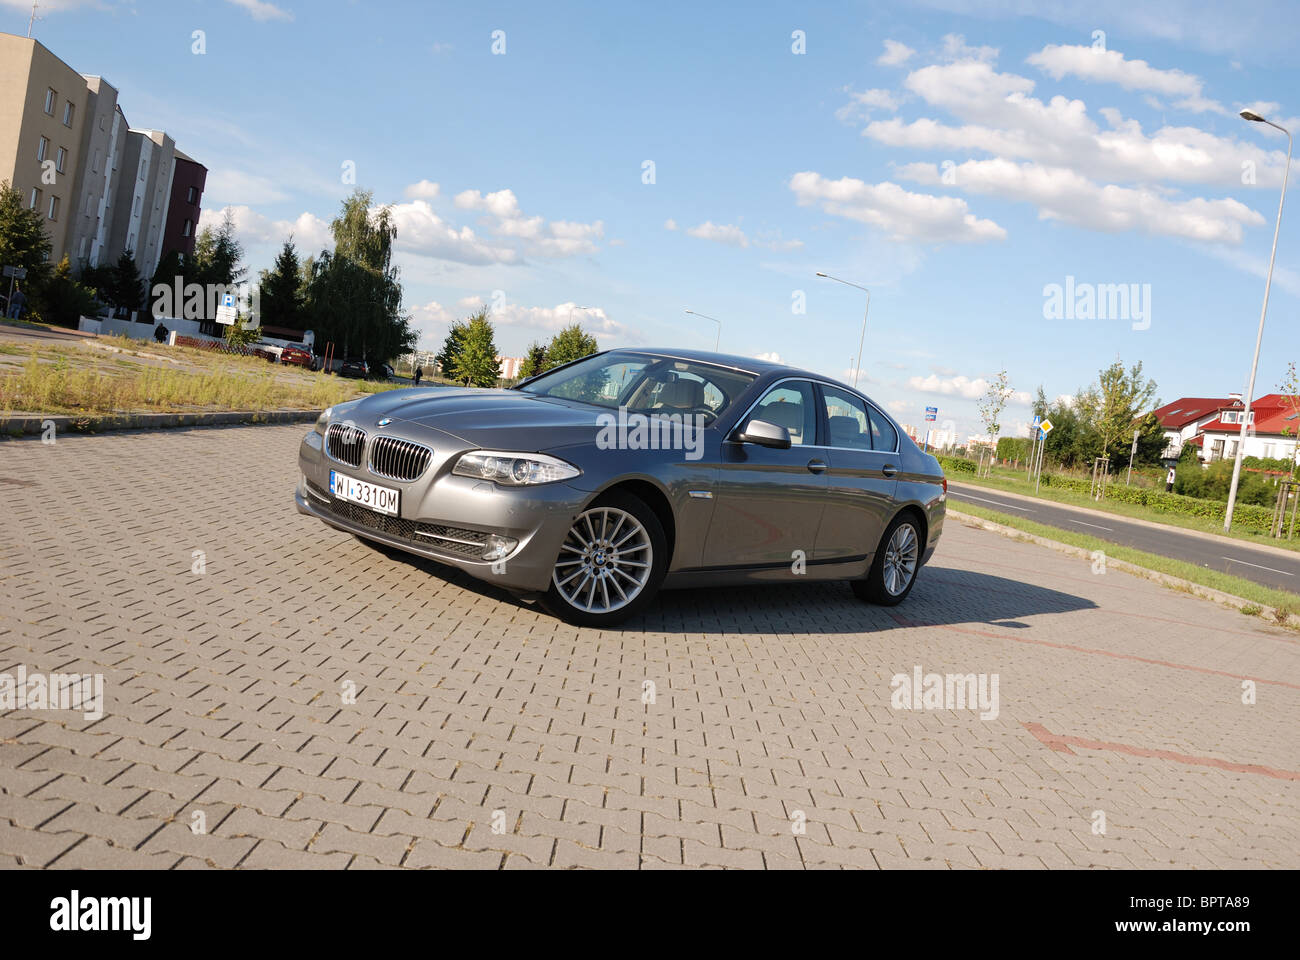 BMW 535i - mein 2010 - grau Metallic - vier Türen (4D) - Premium-deutschen höheren Klasse Limousine, Segment E (Segment Executive) - Stadt Stockfoto